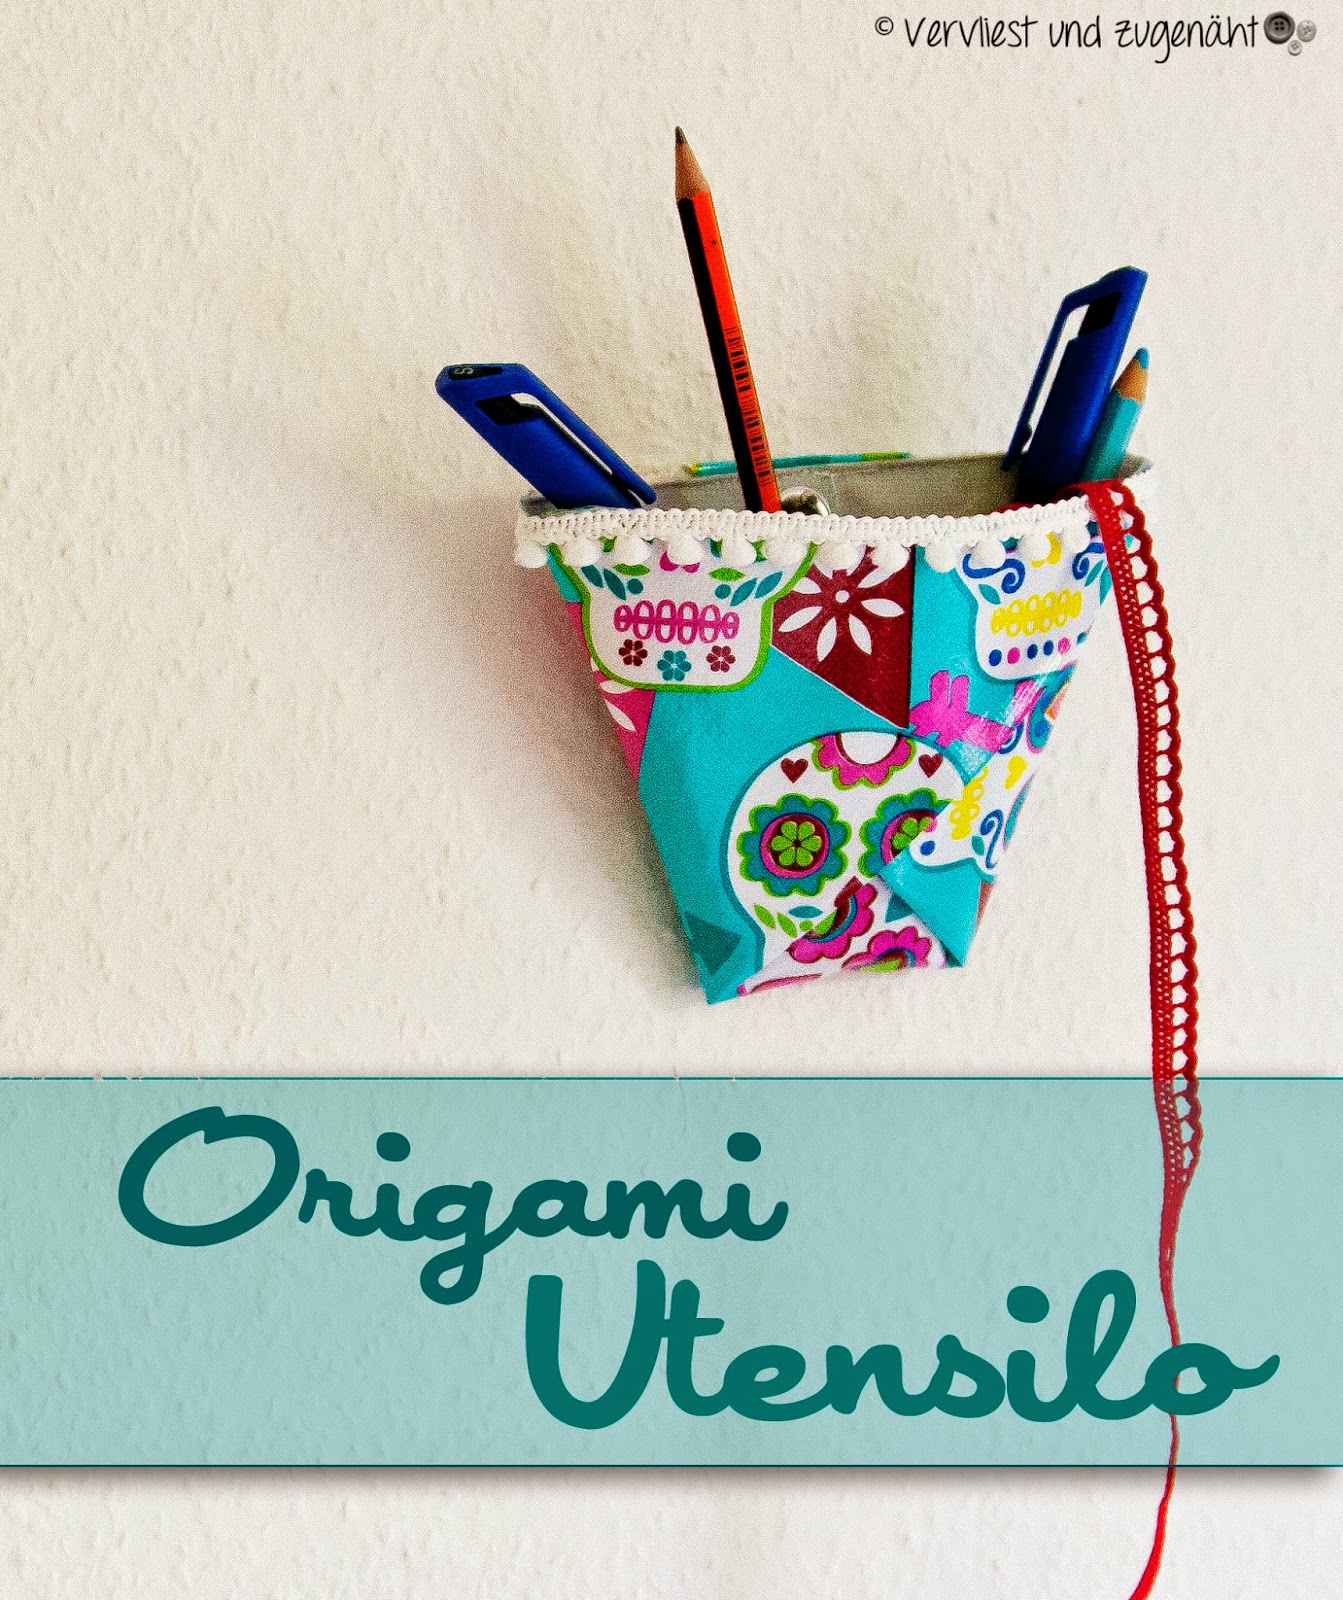 http://vervliestundzugenaeht.blogspot.de/2014/09/origami-utensilo-gastpost.html